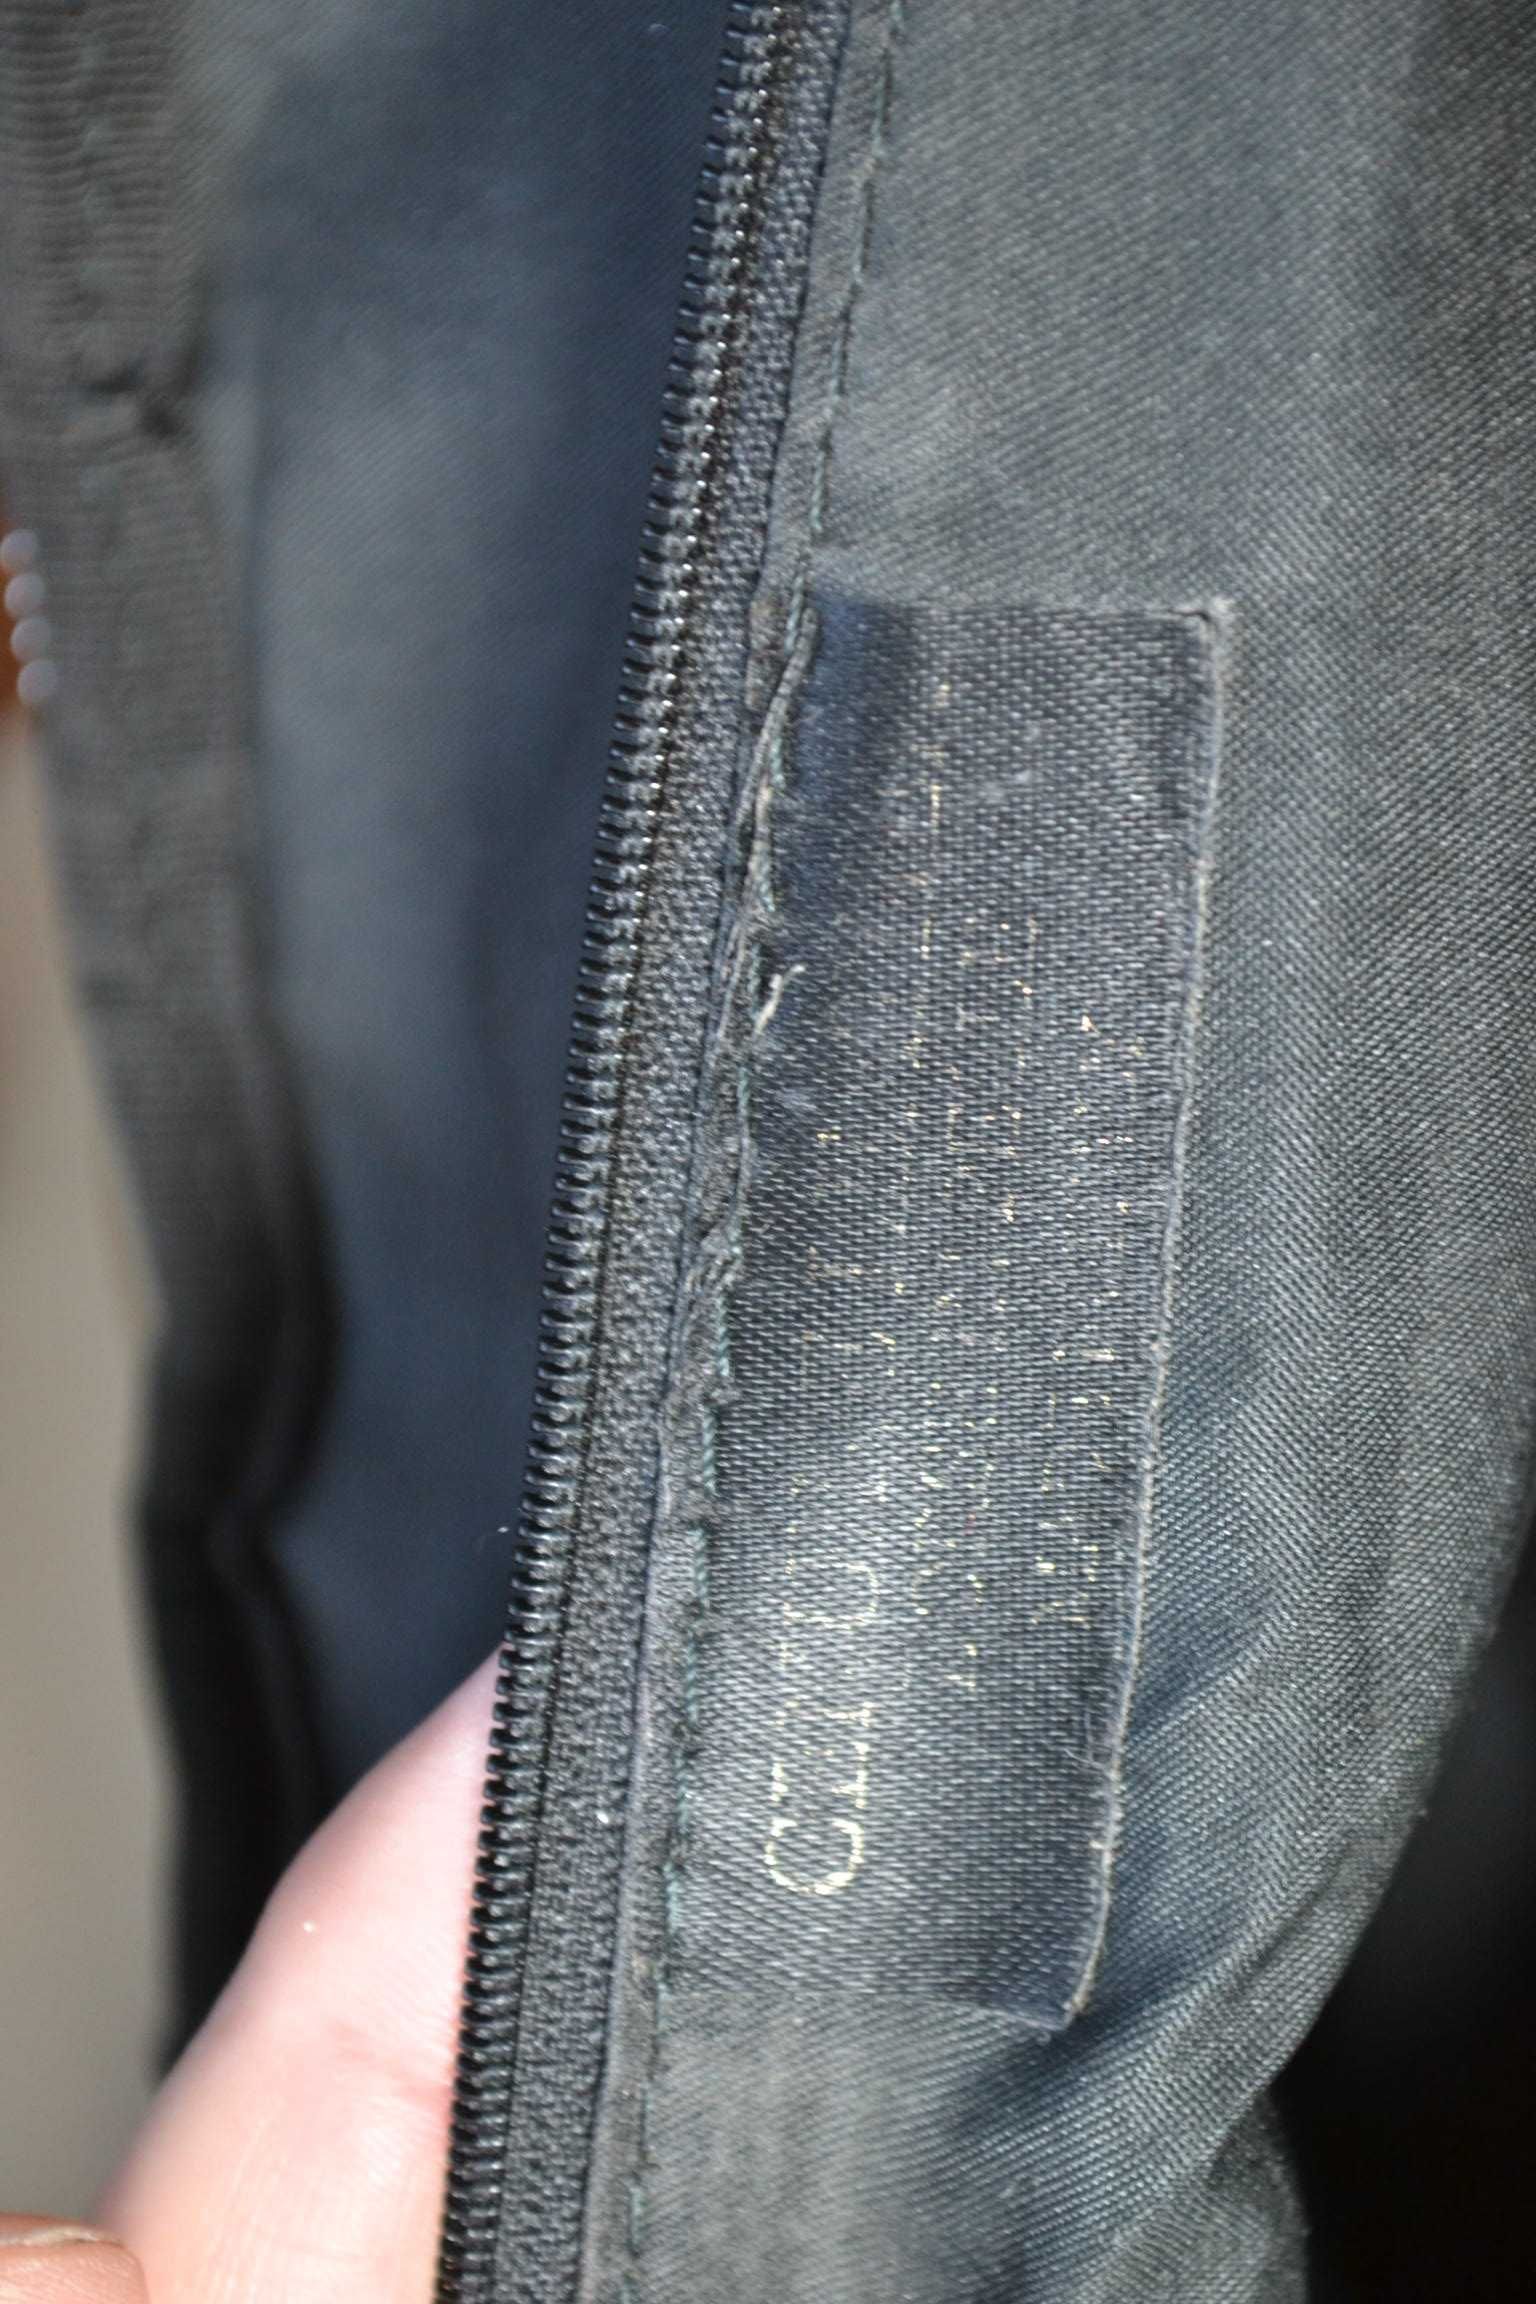 genuine leather made in italy borse in pelle рюкзак кожаный оригинал